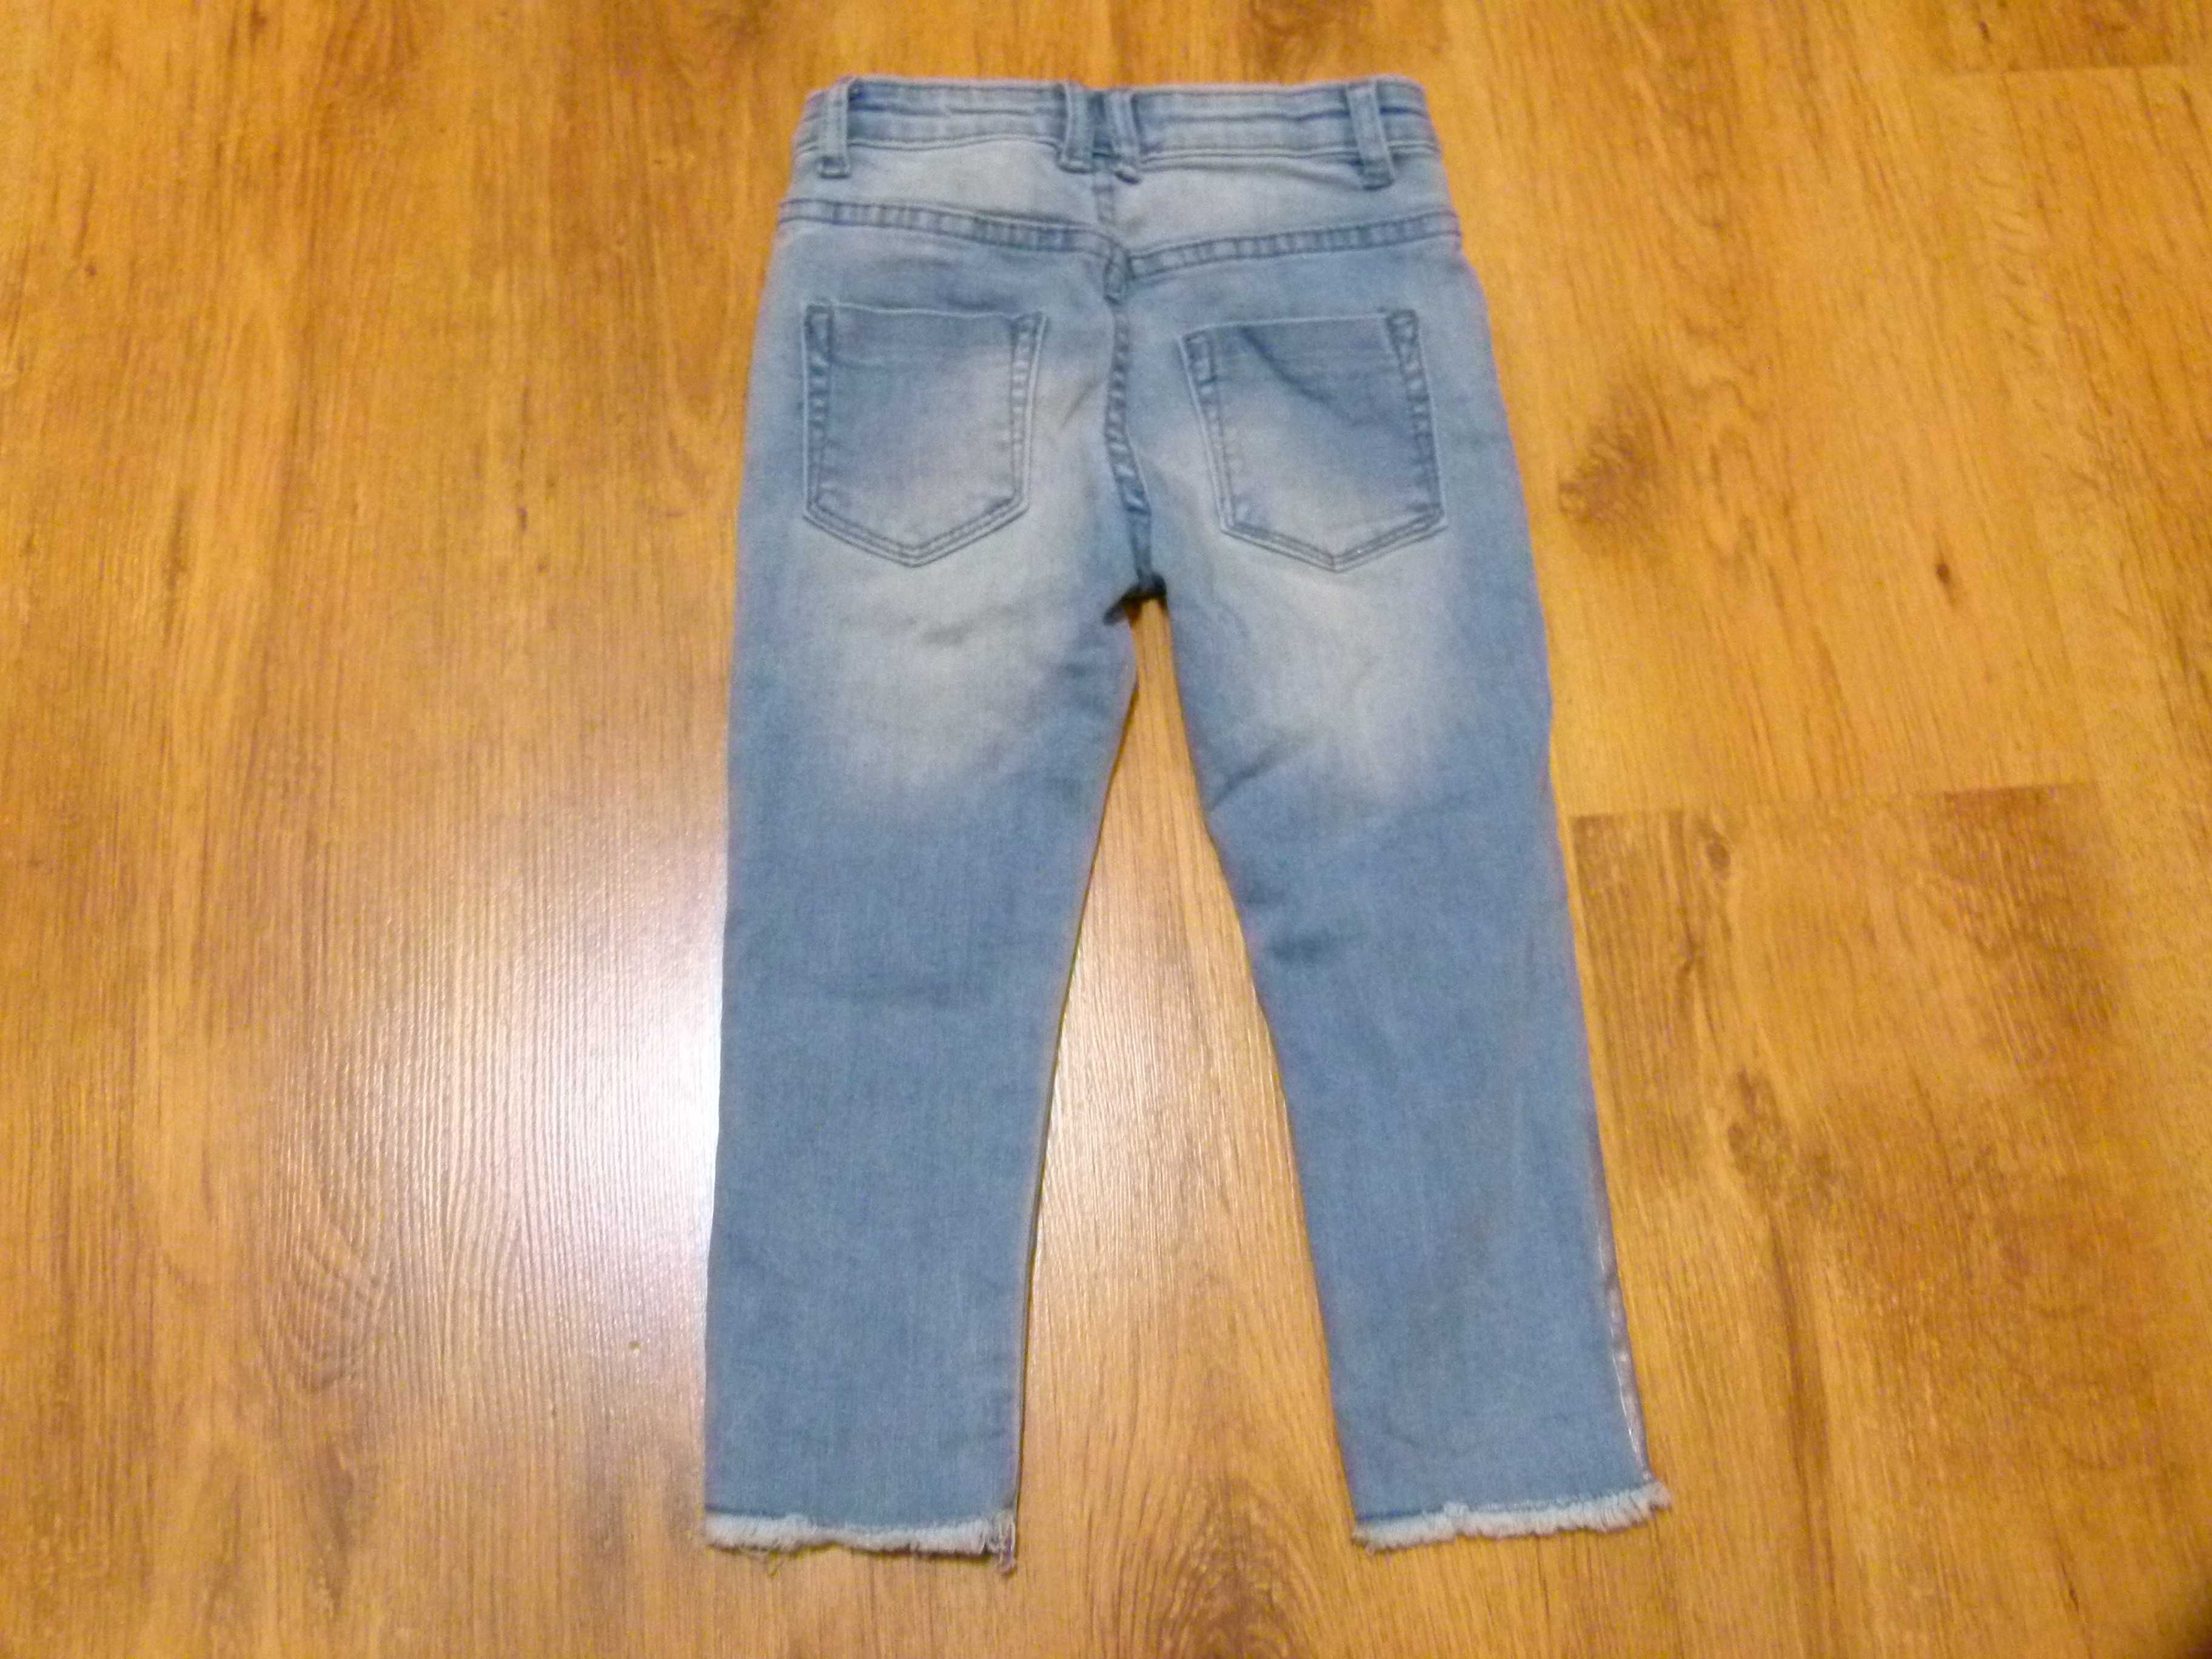 rozm 98 Primark spodnie jeans postrzępione srebrny dół